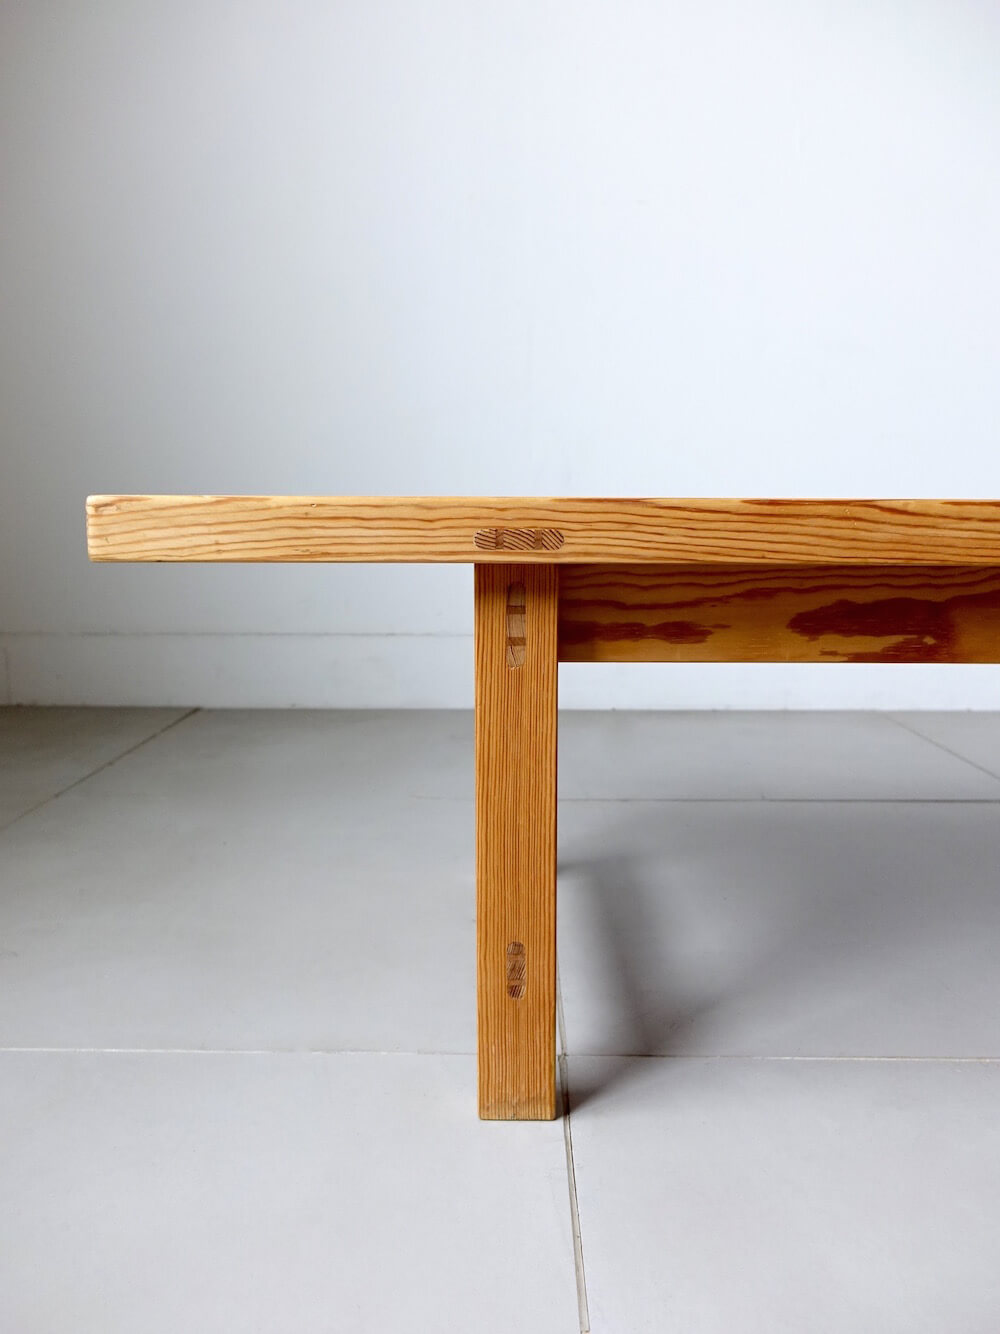 Slat Bench Table by Hugo Svensson for Bjärnums Möbelfabriker